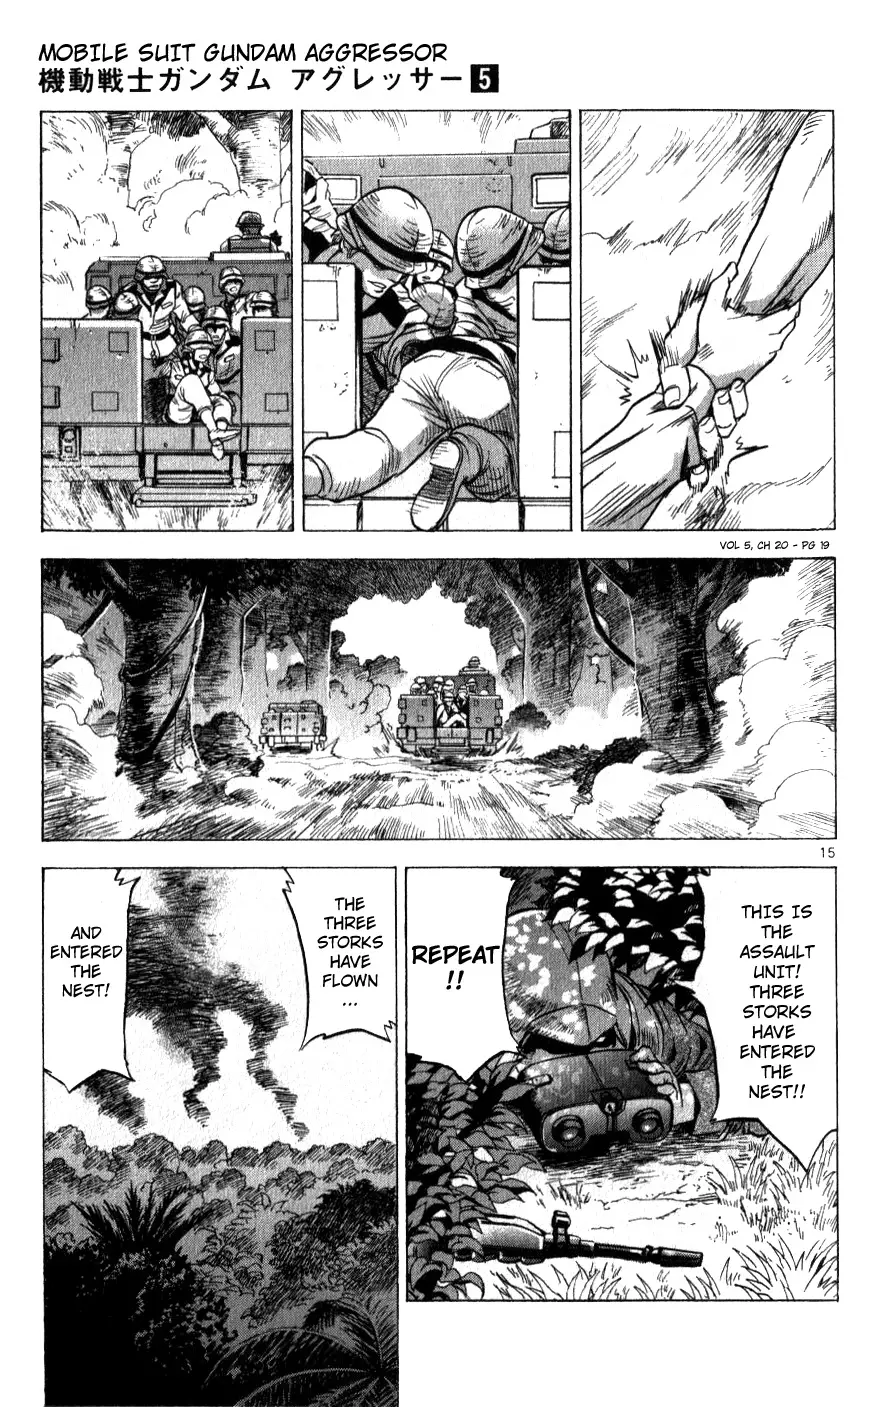 Mobile Suit Gundam Aggressor - 20 page 16-f1c9e263